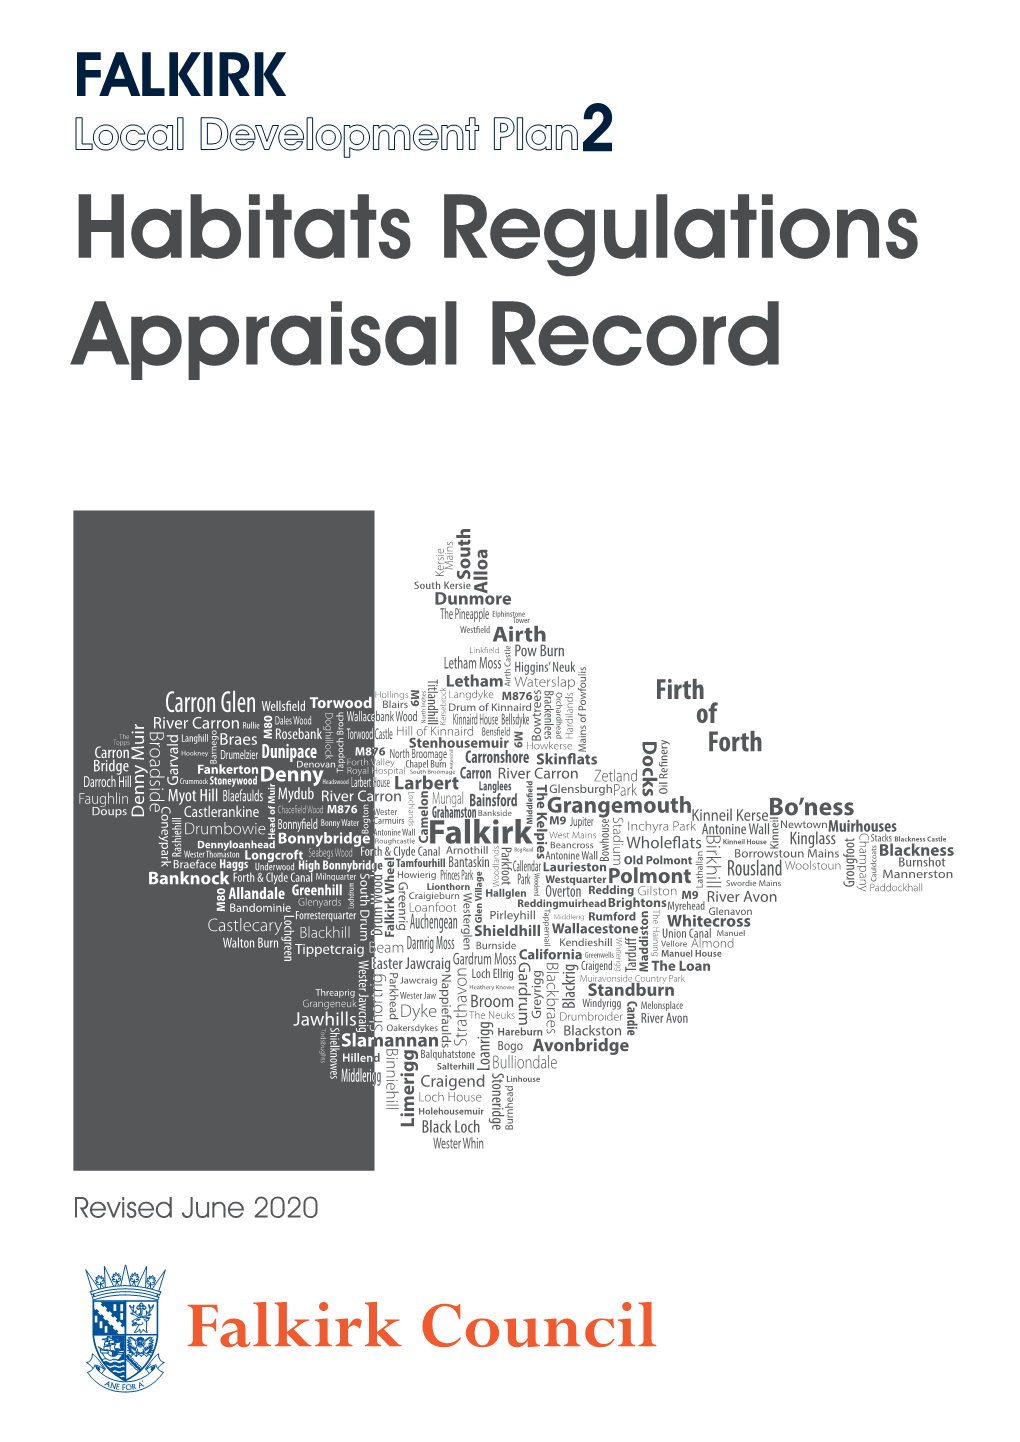 HRA Regulations Appraisal Record